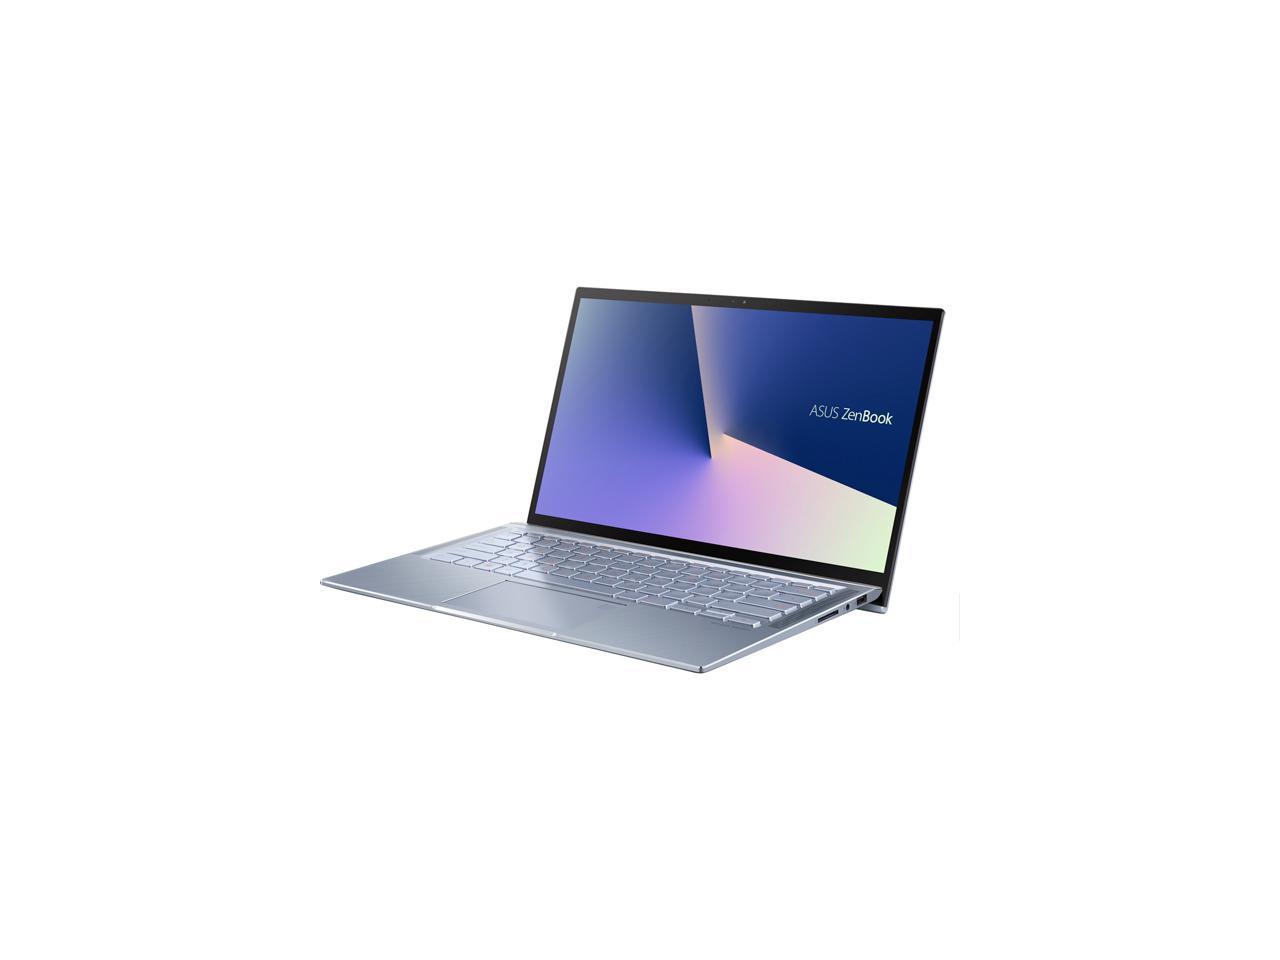 ASUS ZenBook 14, Intel Core Whiskey Lake i7-8565U, 8 GB RAM, 512 GB NVMe PCIe SSD, Wi-Fi 5, Windows 10, Silver Blue, Ultra Thin and Light Laptop, 4-Way NanoEdge 14